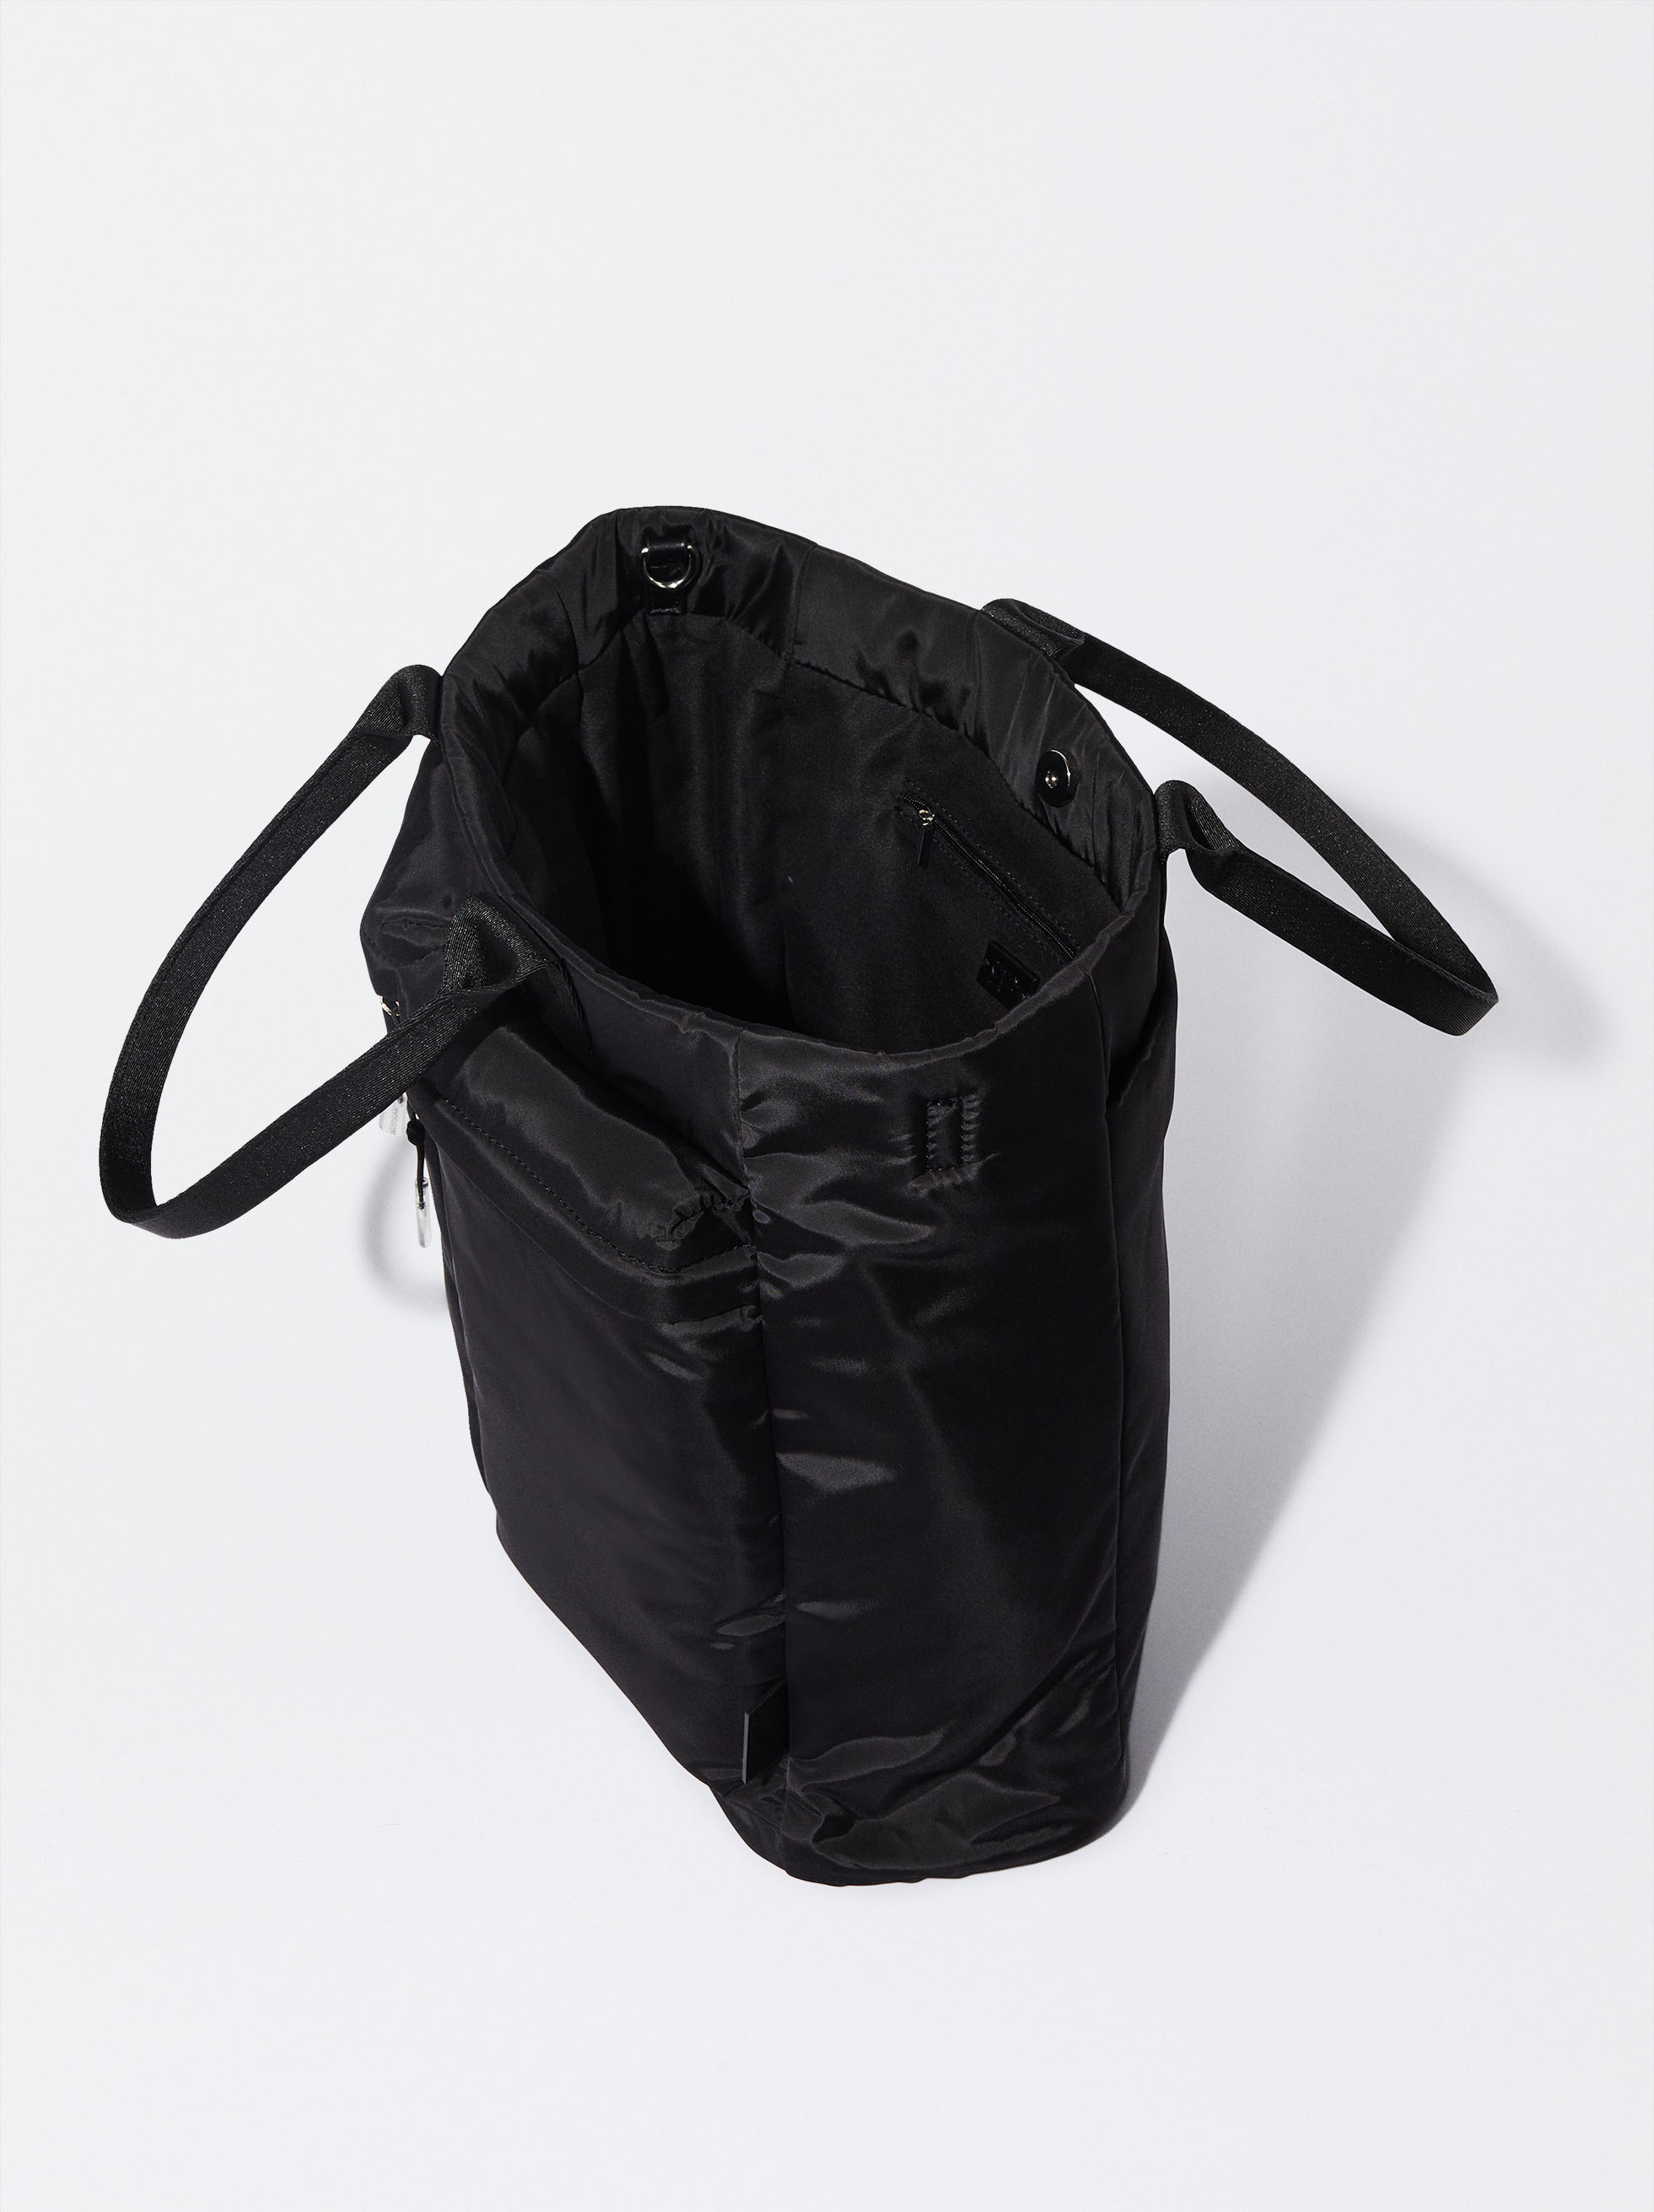 Nylon Tote Bag Black